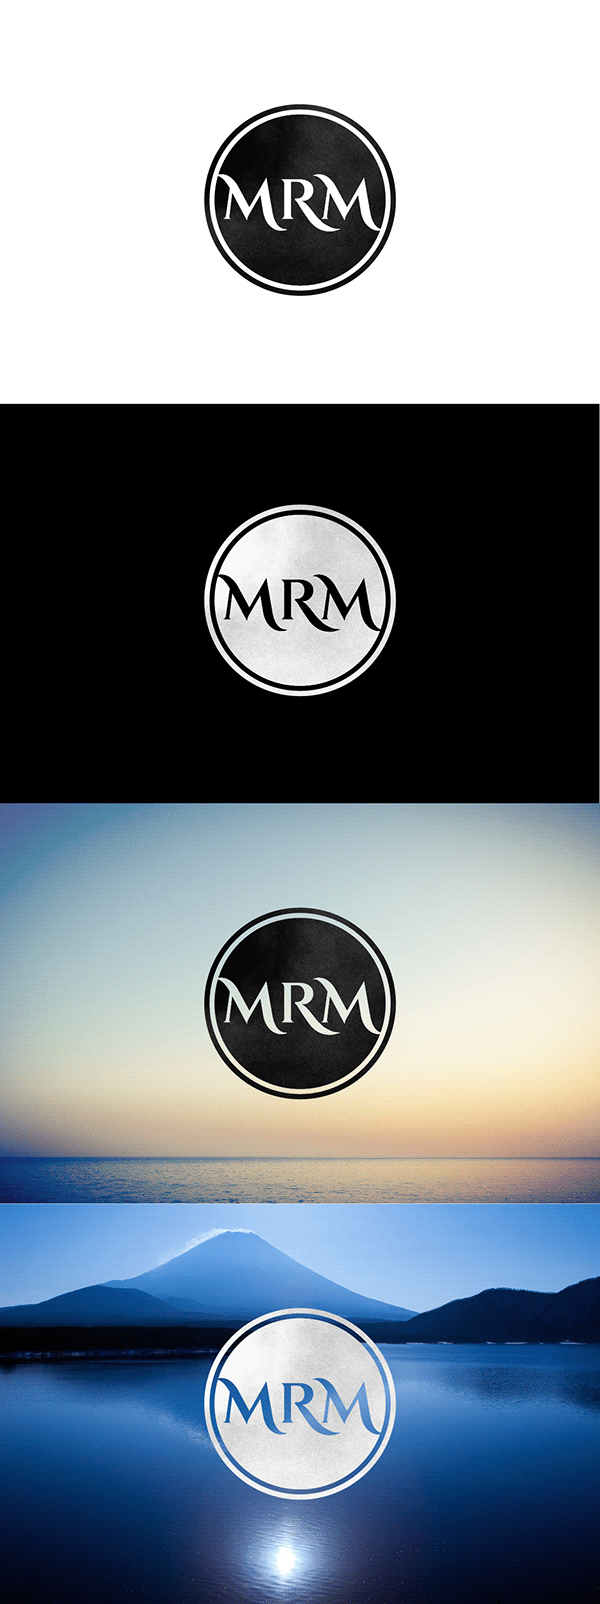 MRM Logo PNG Transparent & SVG Vector - Freebie Supply